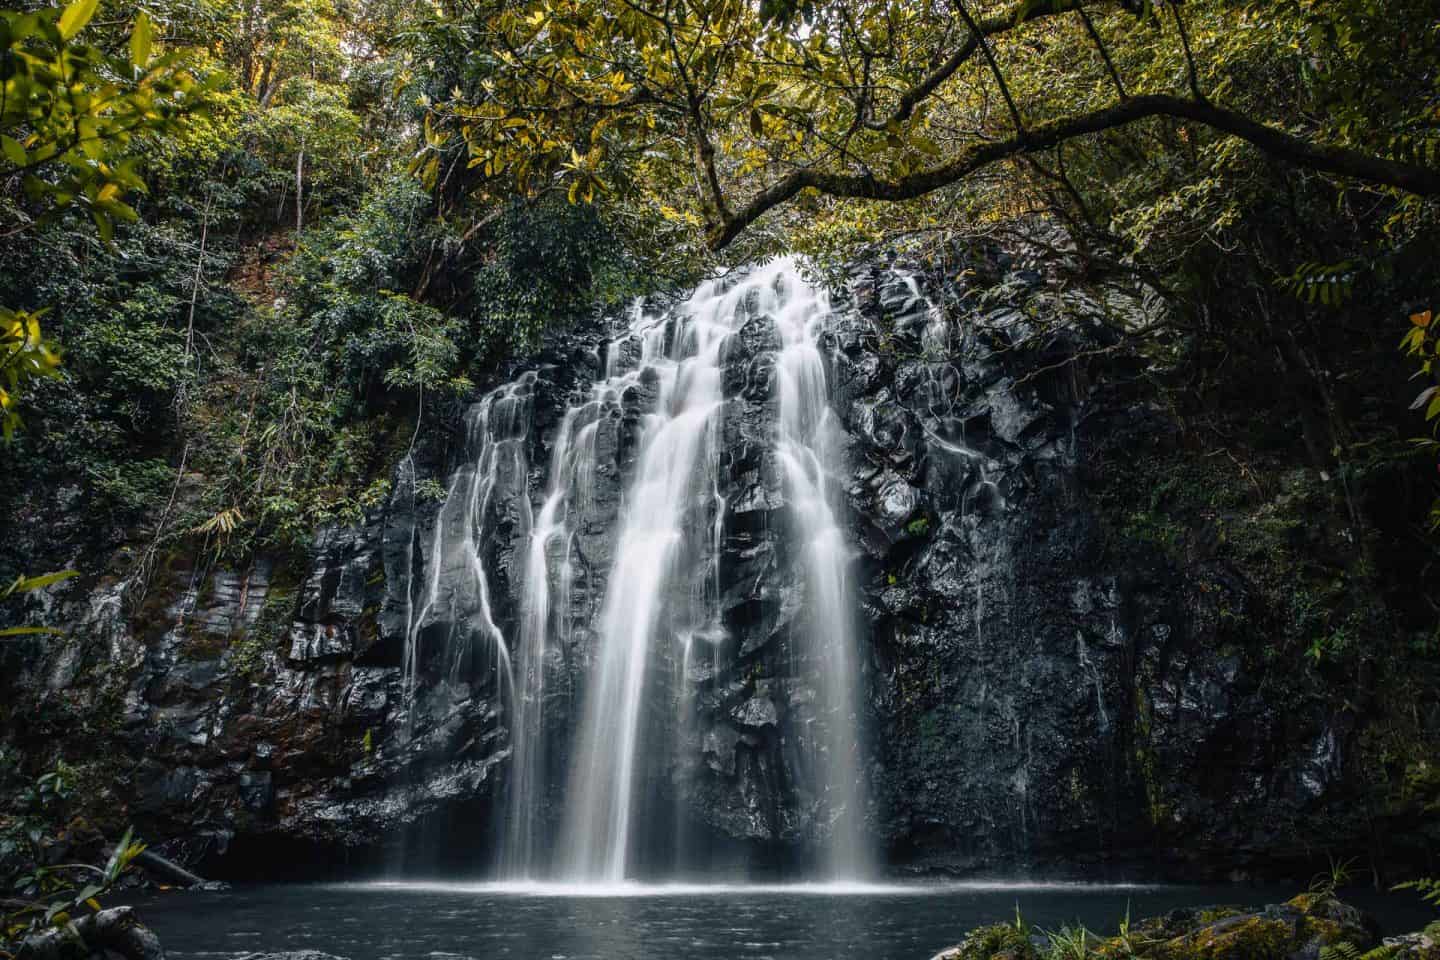 Ellinjaa Falls, Millaa Millaa, Queensland – What To Expect